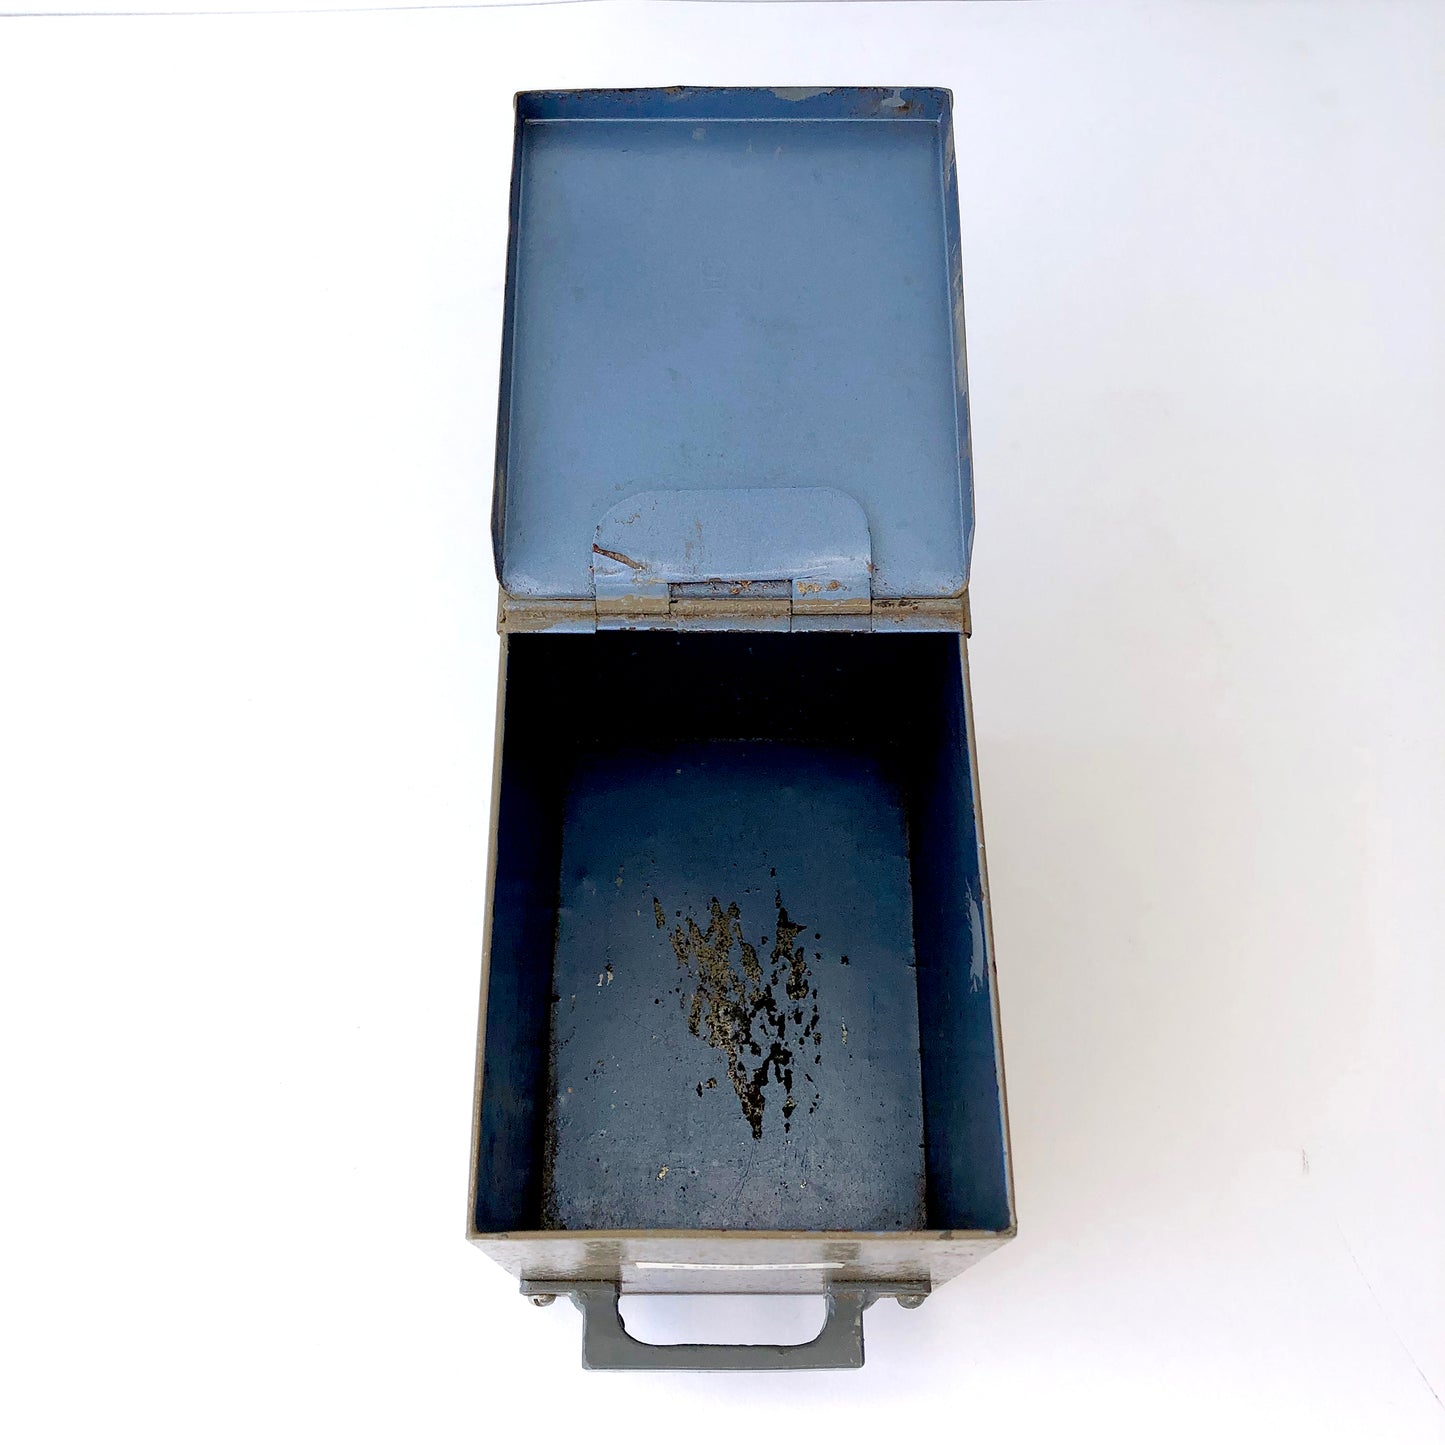 Vintage Metal Desk Tidy Storage Box - Sukie